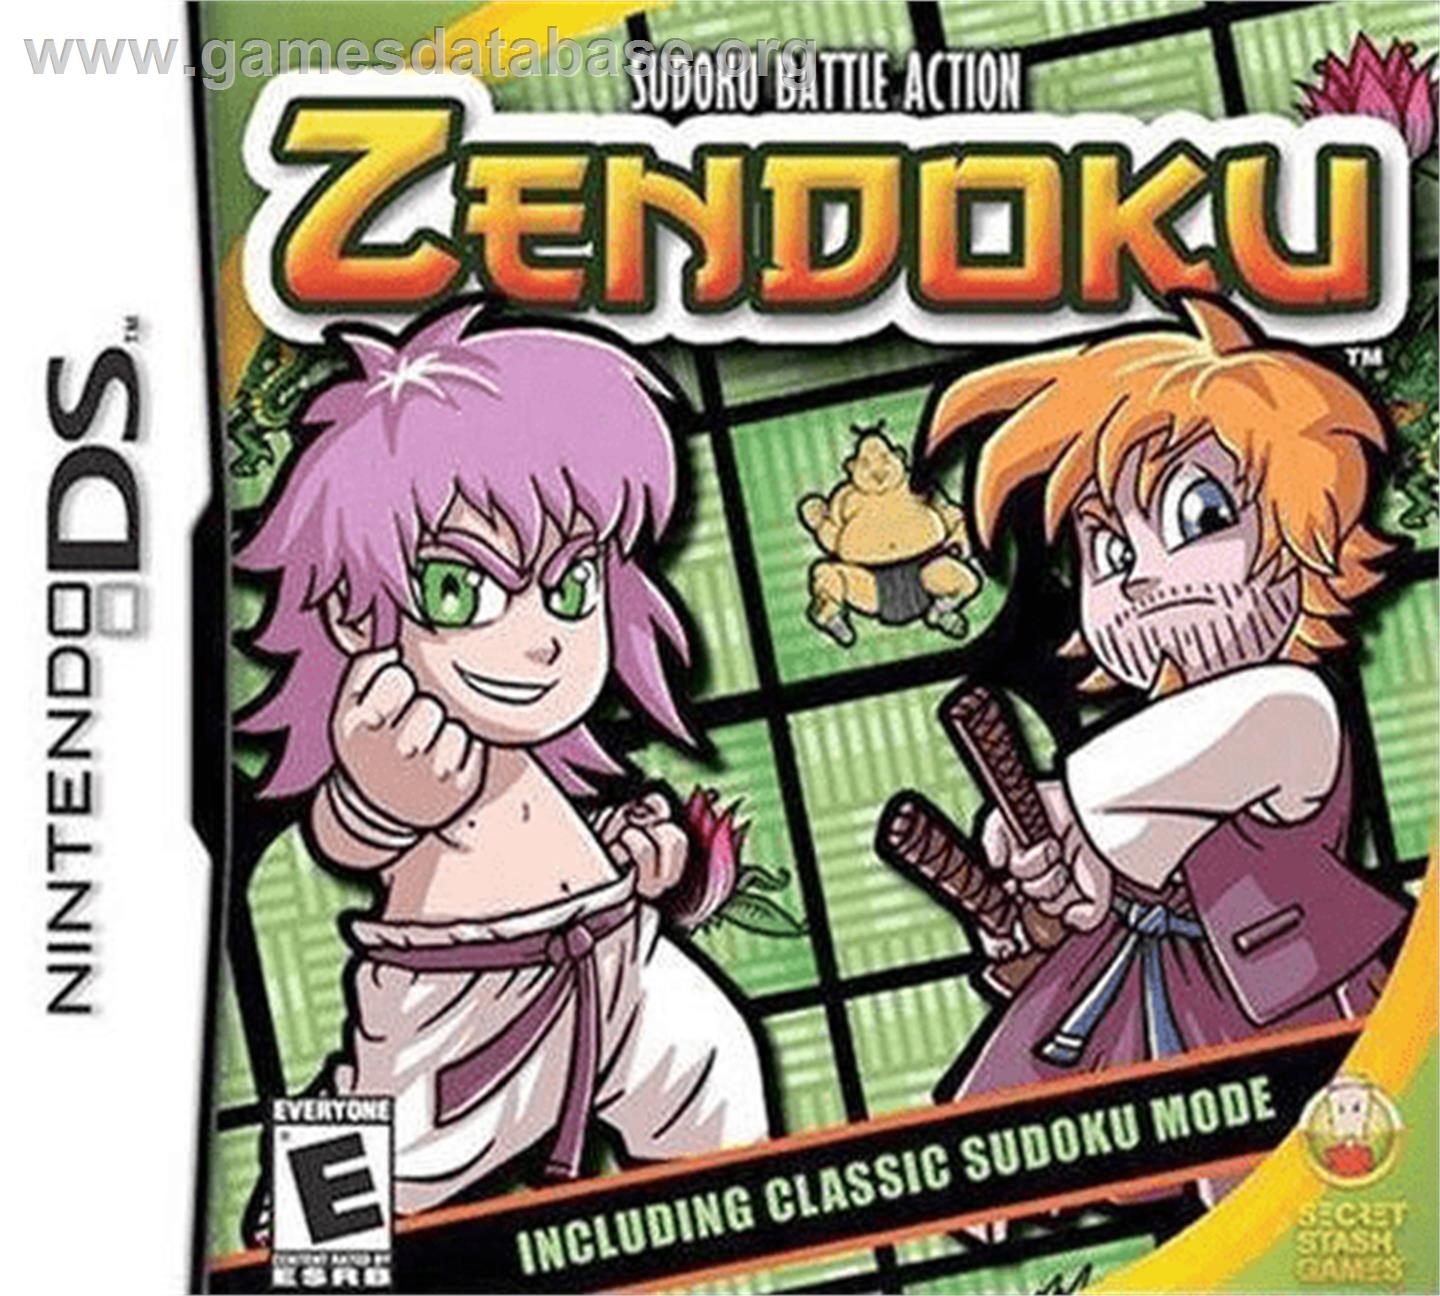 Zendoku - Nintendo DS - Artwork - Box